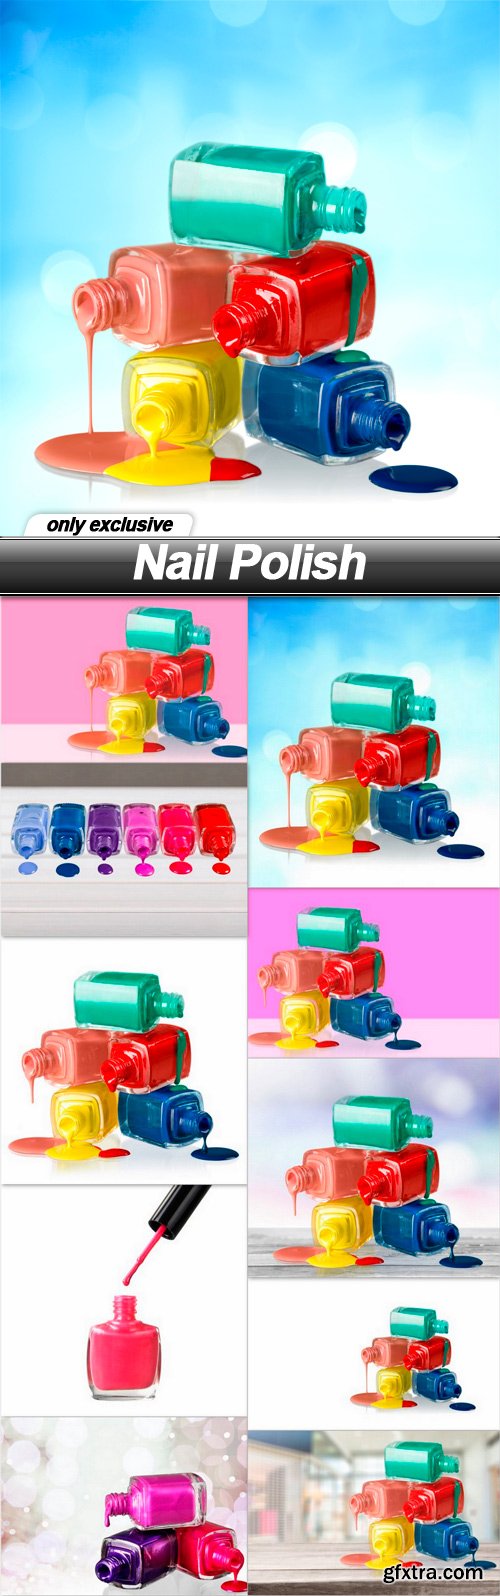 Nail Polish - 10 UHQ JPEG